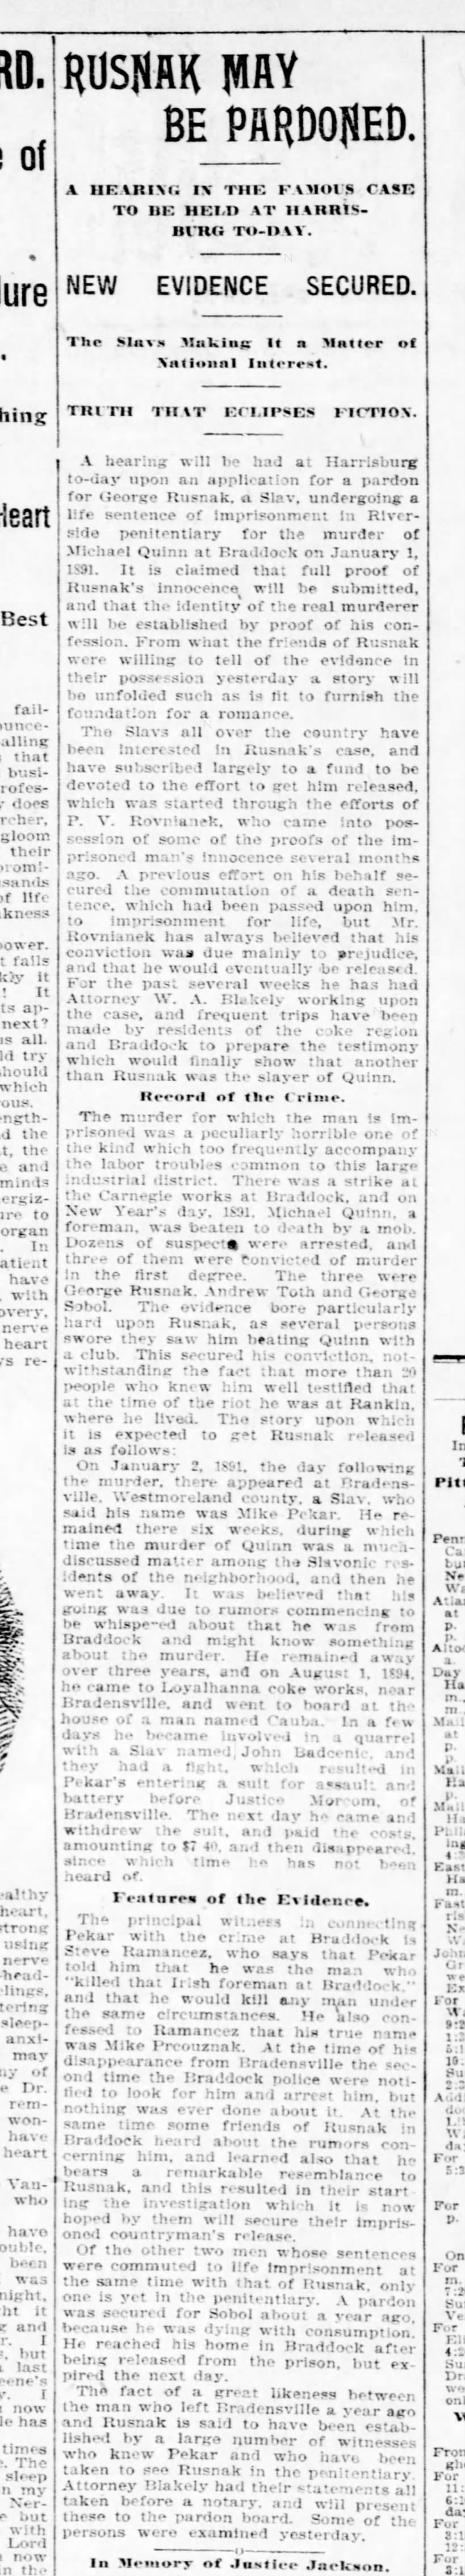 Pittsburgh Daily Post, November 26, 1895